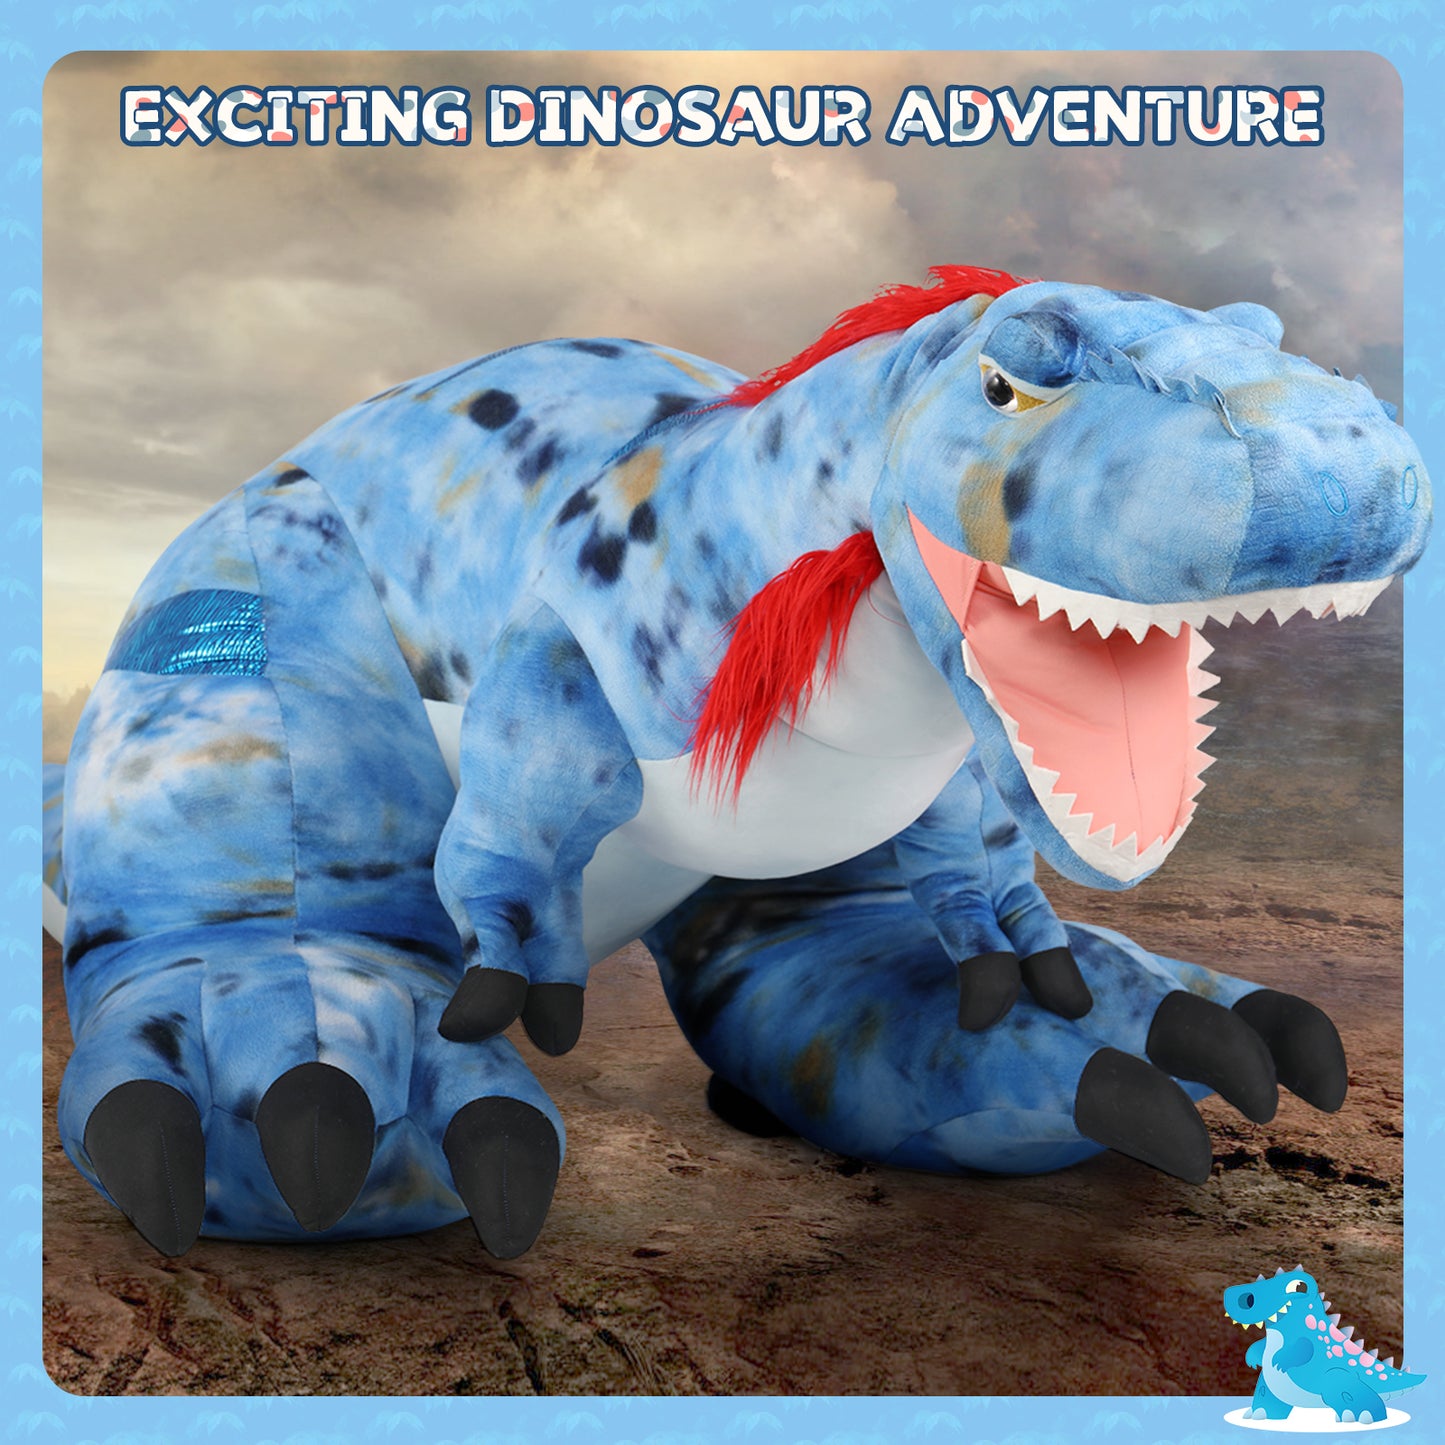 Life Size T Rex Plush Toy Dino Stuffed Animals, 9.2 FT - MorisMos Stuffed Animals - Free Shipping